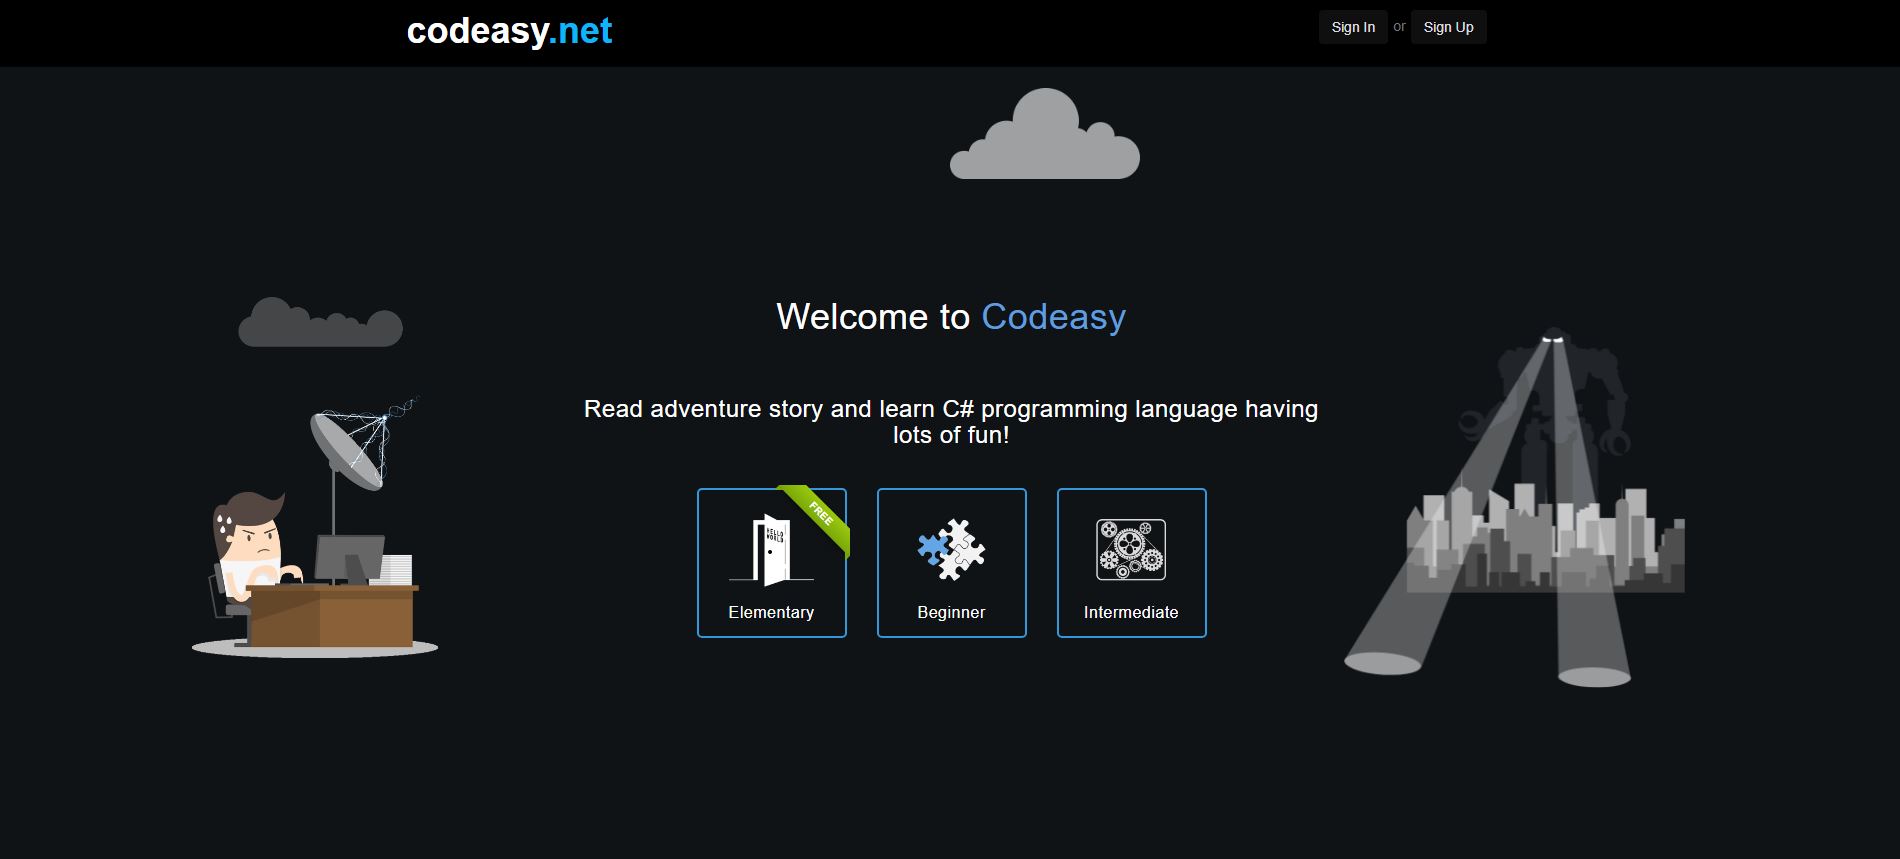 Codeasy.net homepage